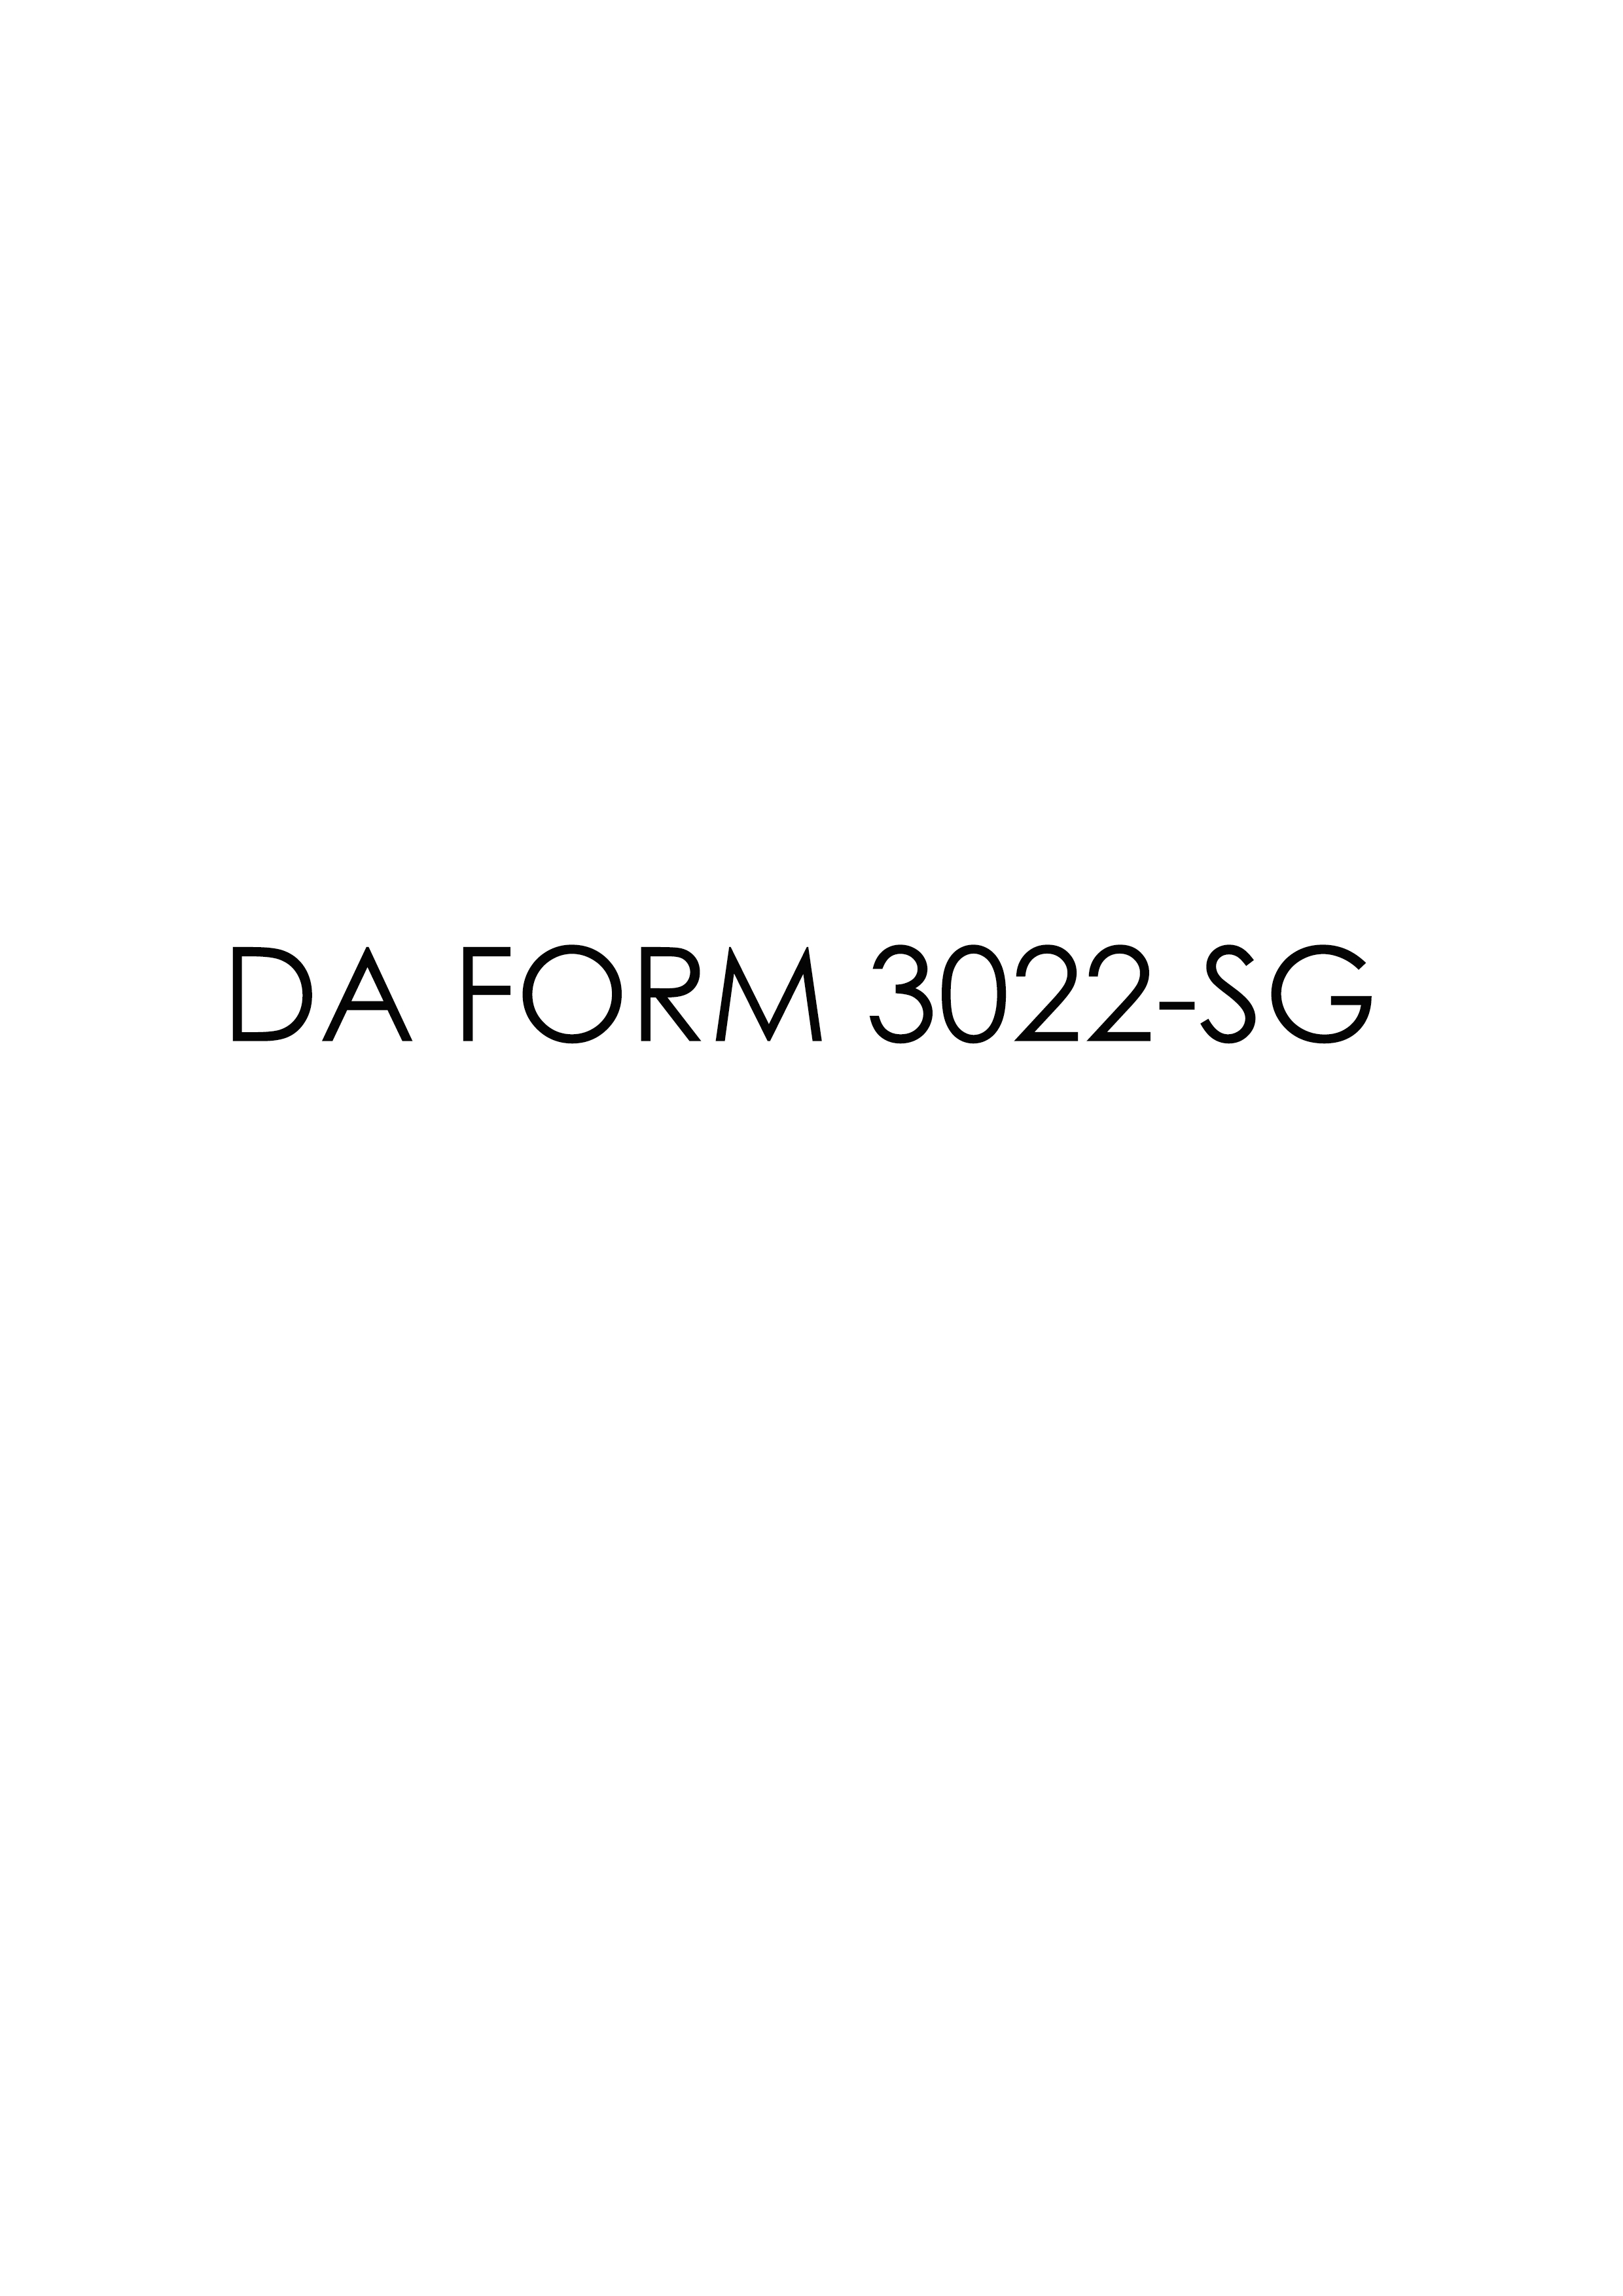 da Form 3022-SG fillable